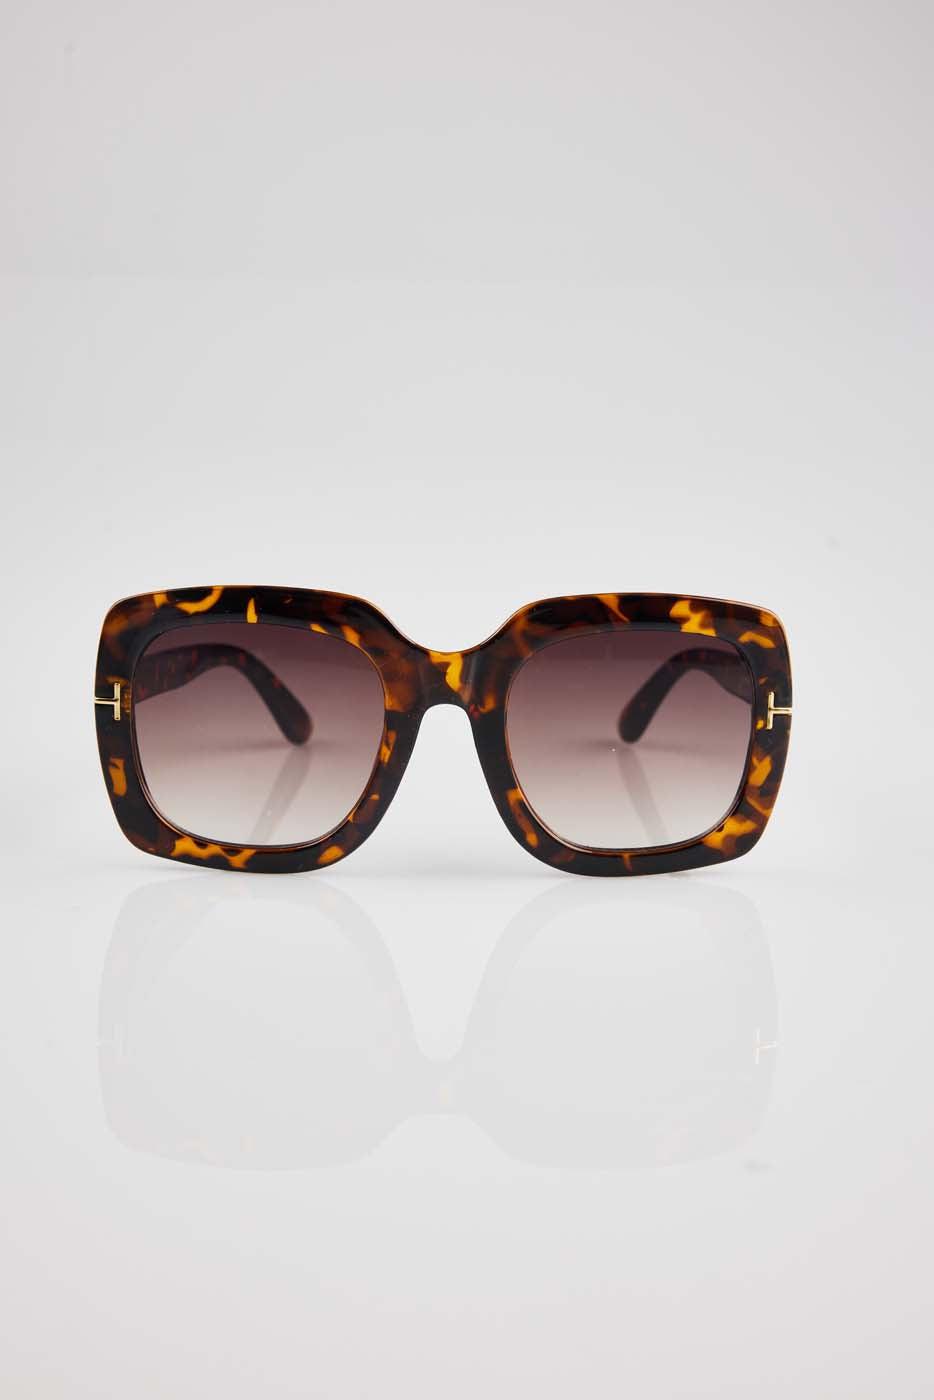 Capri Sunglasses - Tortoise Shell-Headwear & Sunglasses-Holiday-The Bay Room